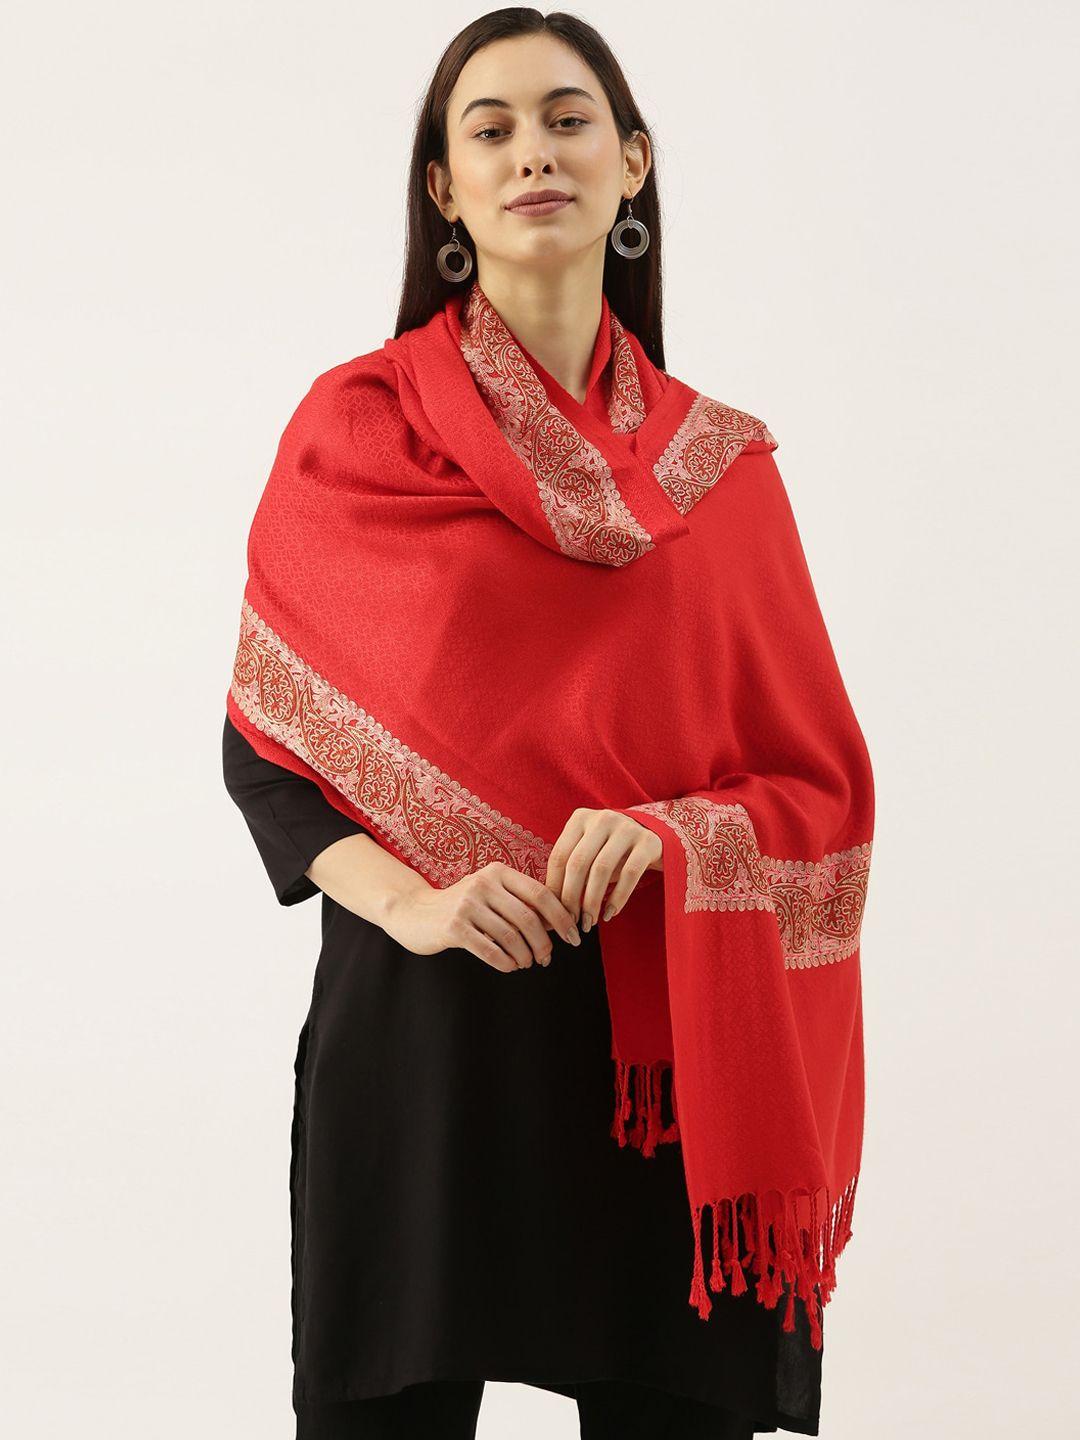 pashmoda women red & beige aari embroidered shawl